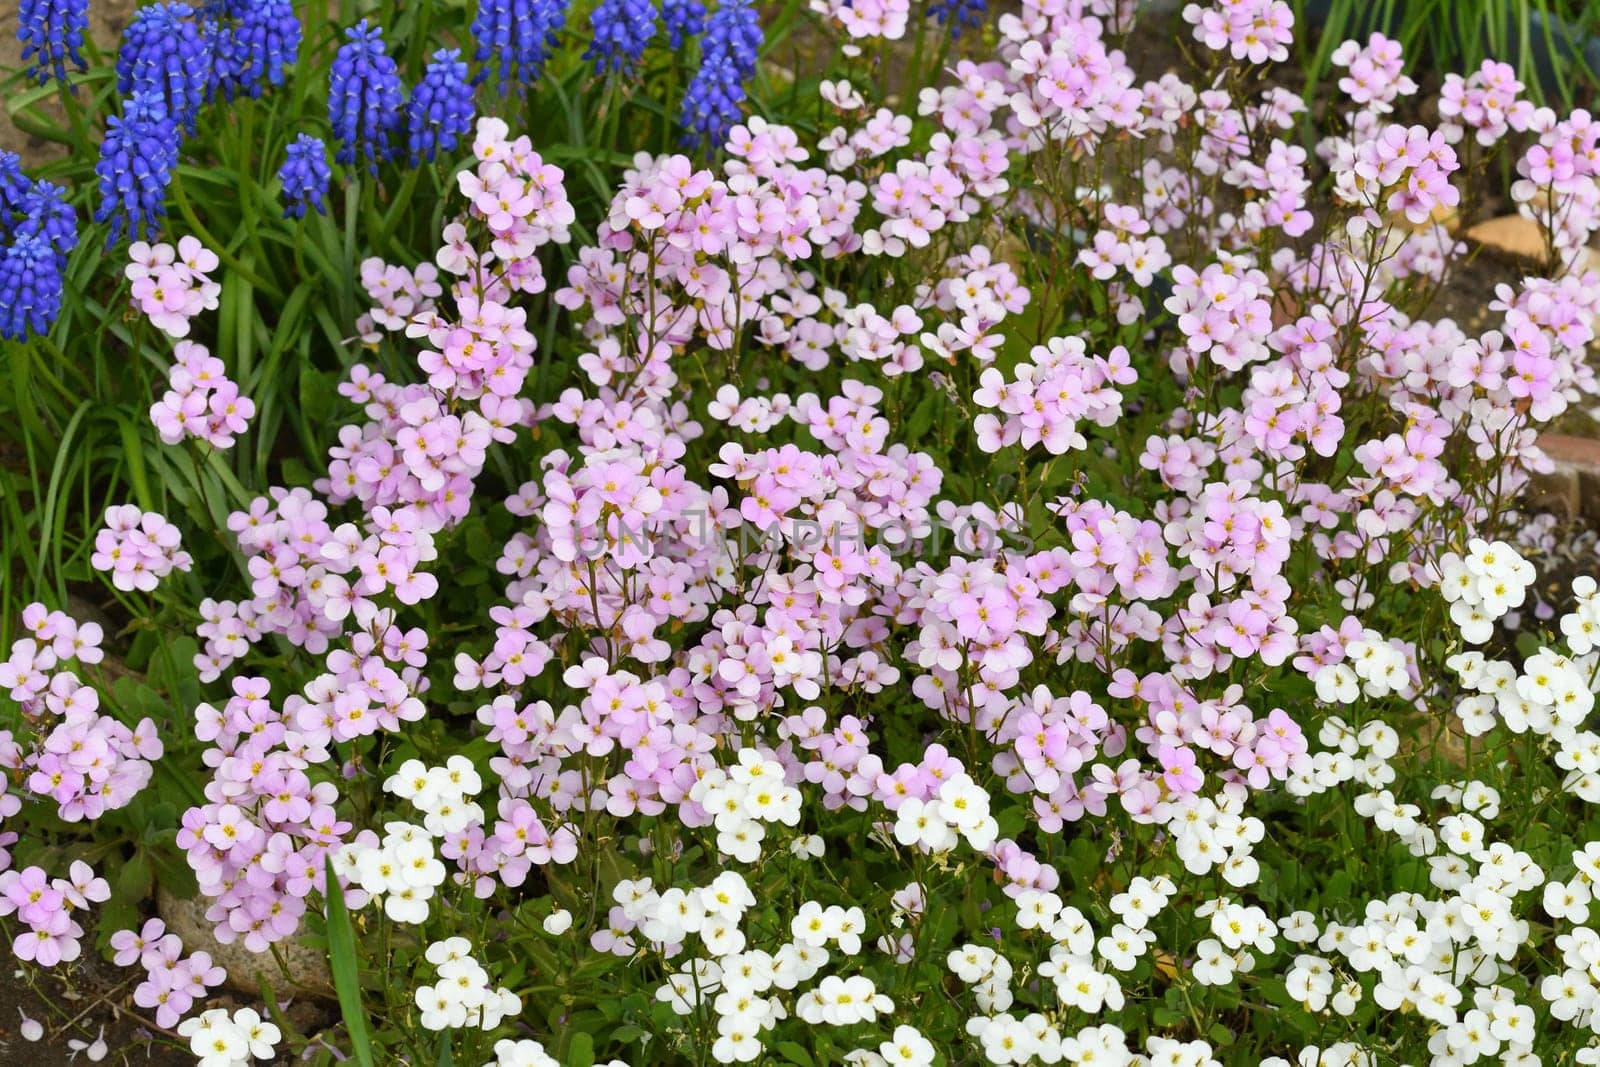 Arabis and Muscari - early spring flower, primrose